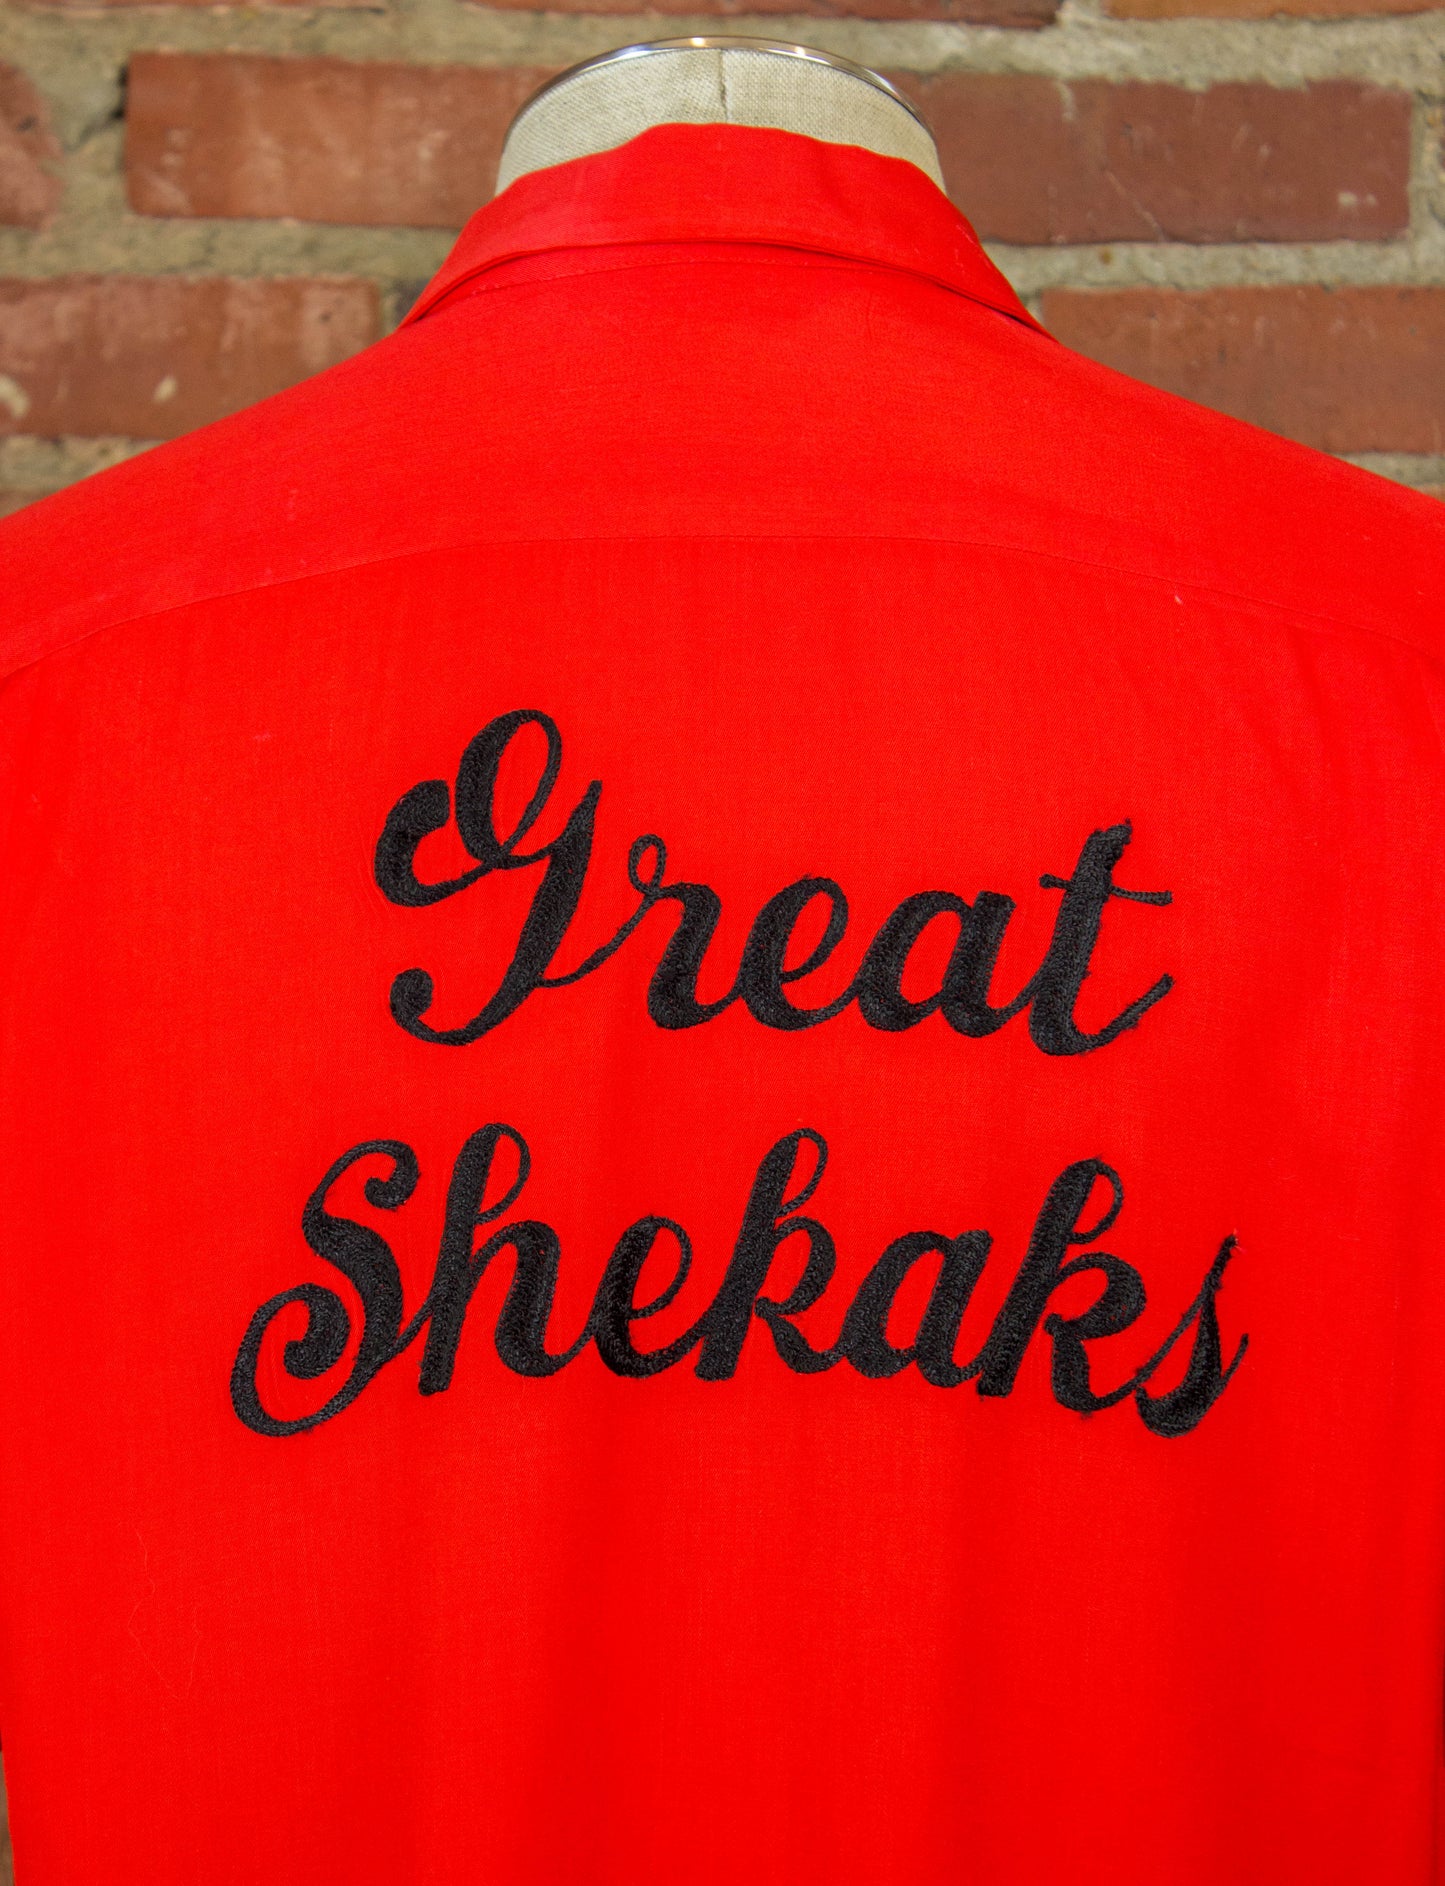 Vintage Great Shekaks Chainstitch Gaberdine Shirt 50s Red and Black Rayon Loop Collar Large-XL